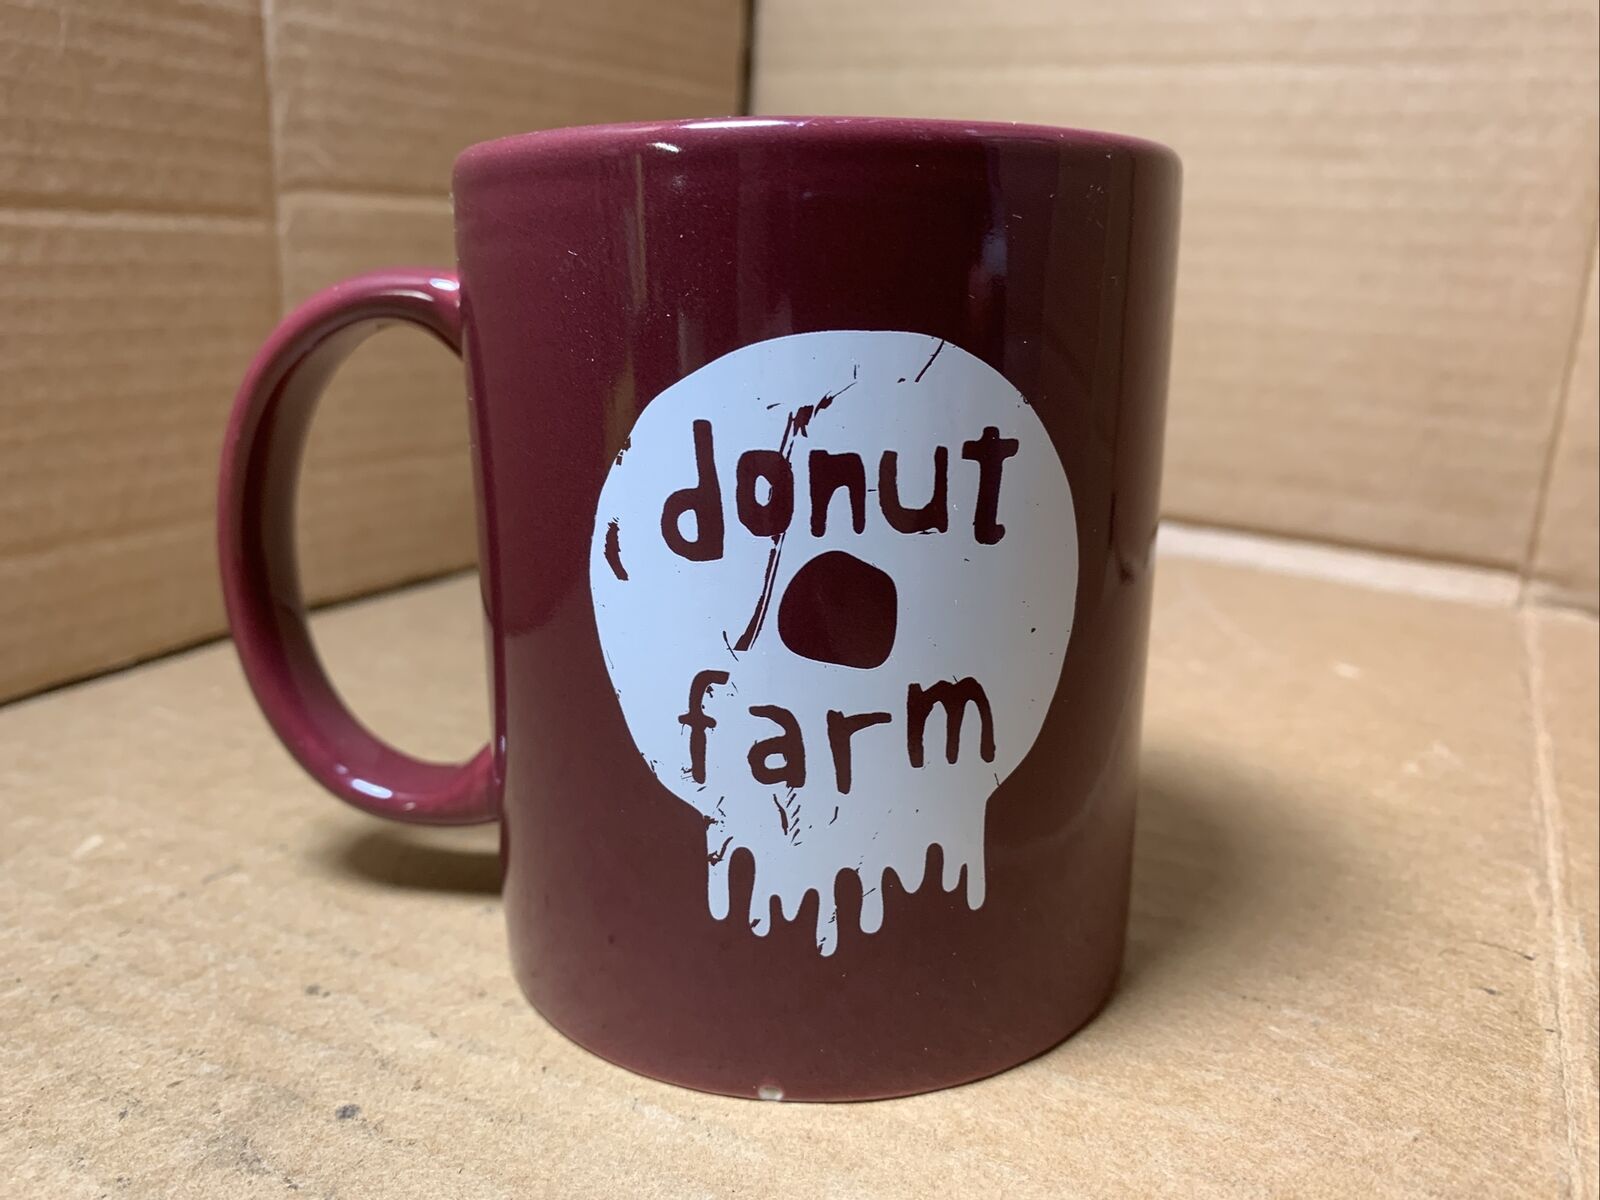 San Francisco DONUT FARM Organic Vegan Logo Ceramic Coffee MUG Cup California